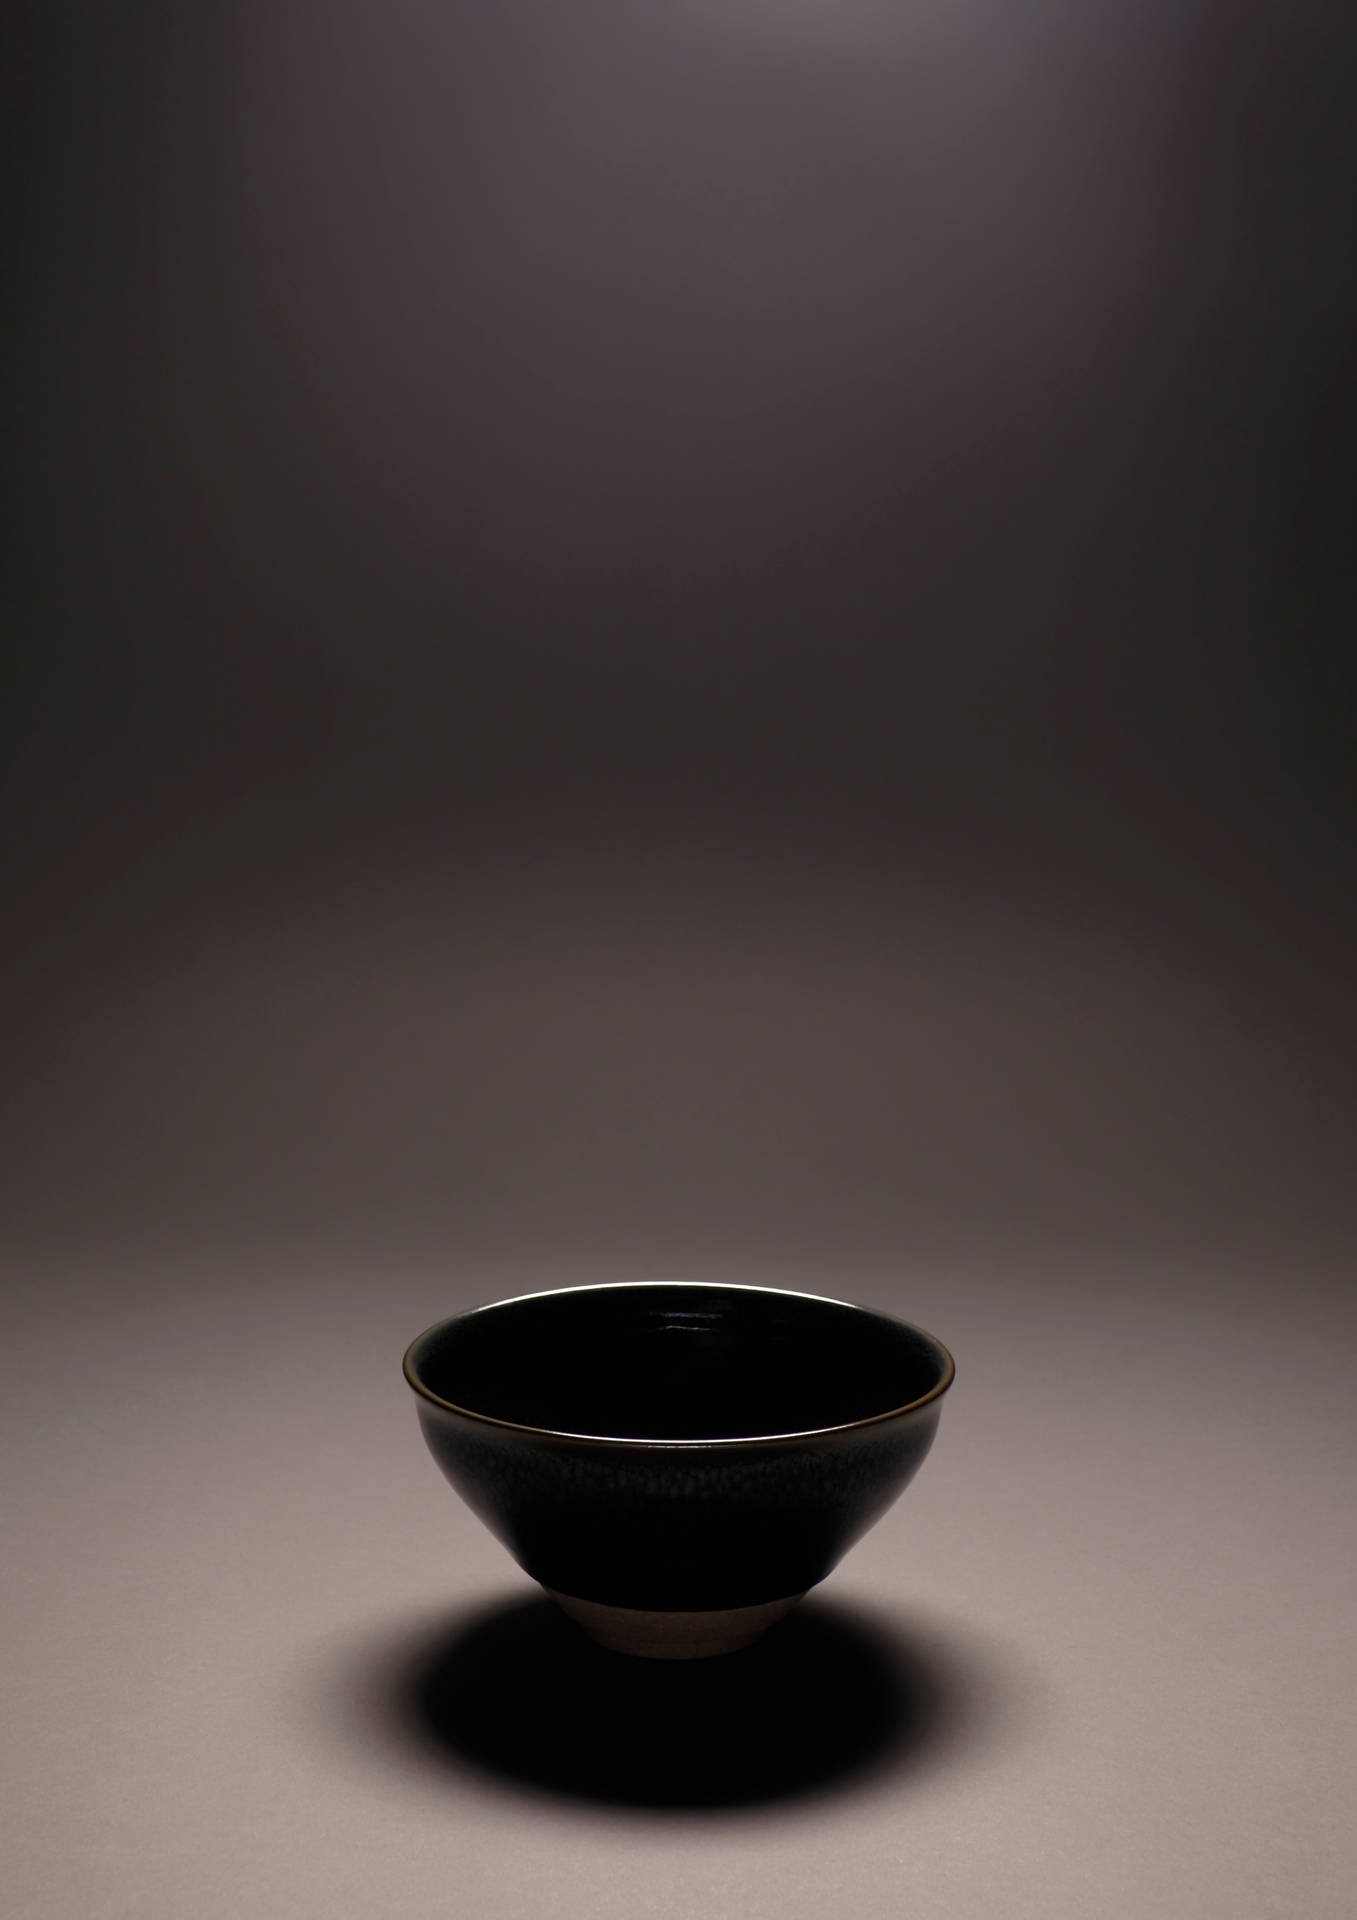 Artistic Black Bowl Silhouette Background